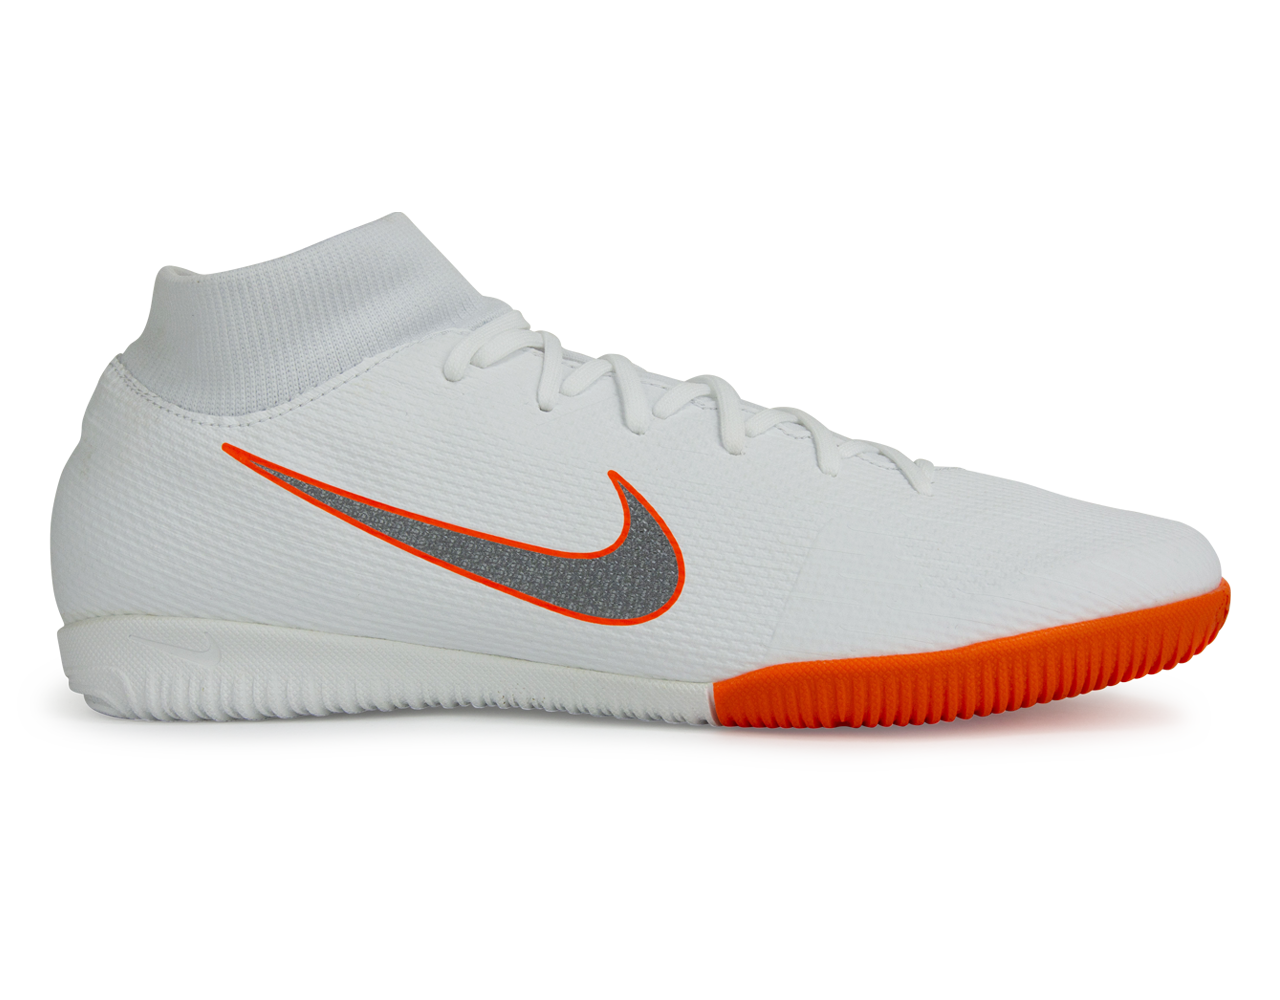 Nike Men's Mercurial SuperflyX 6 Academy Indoor Soccer Shoes White/Metallic Cool Grey/Total Orange